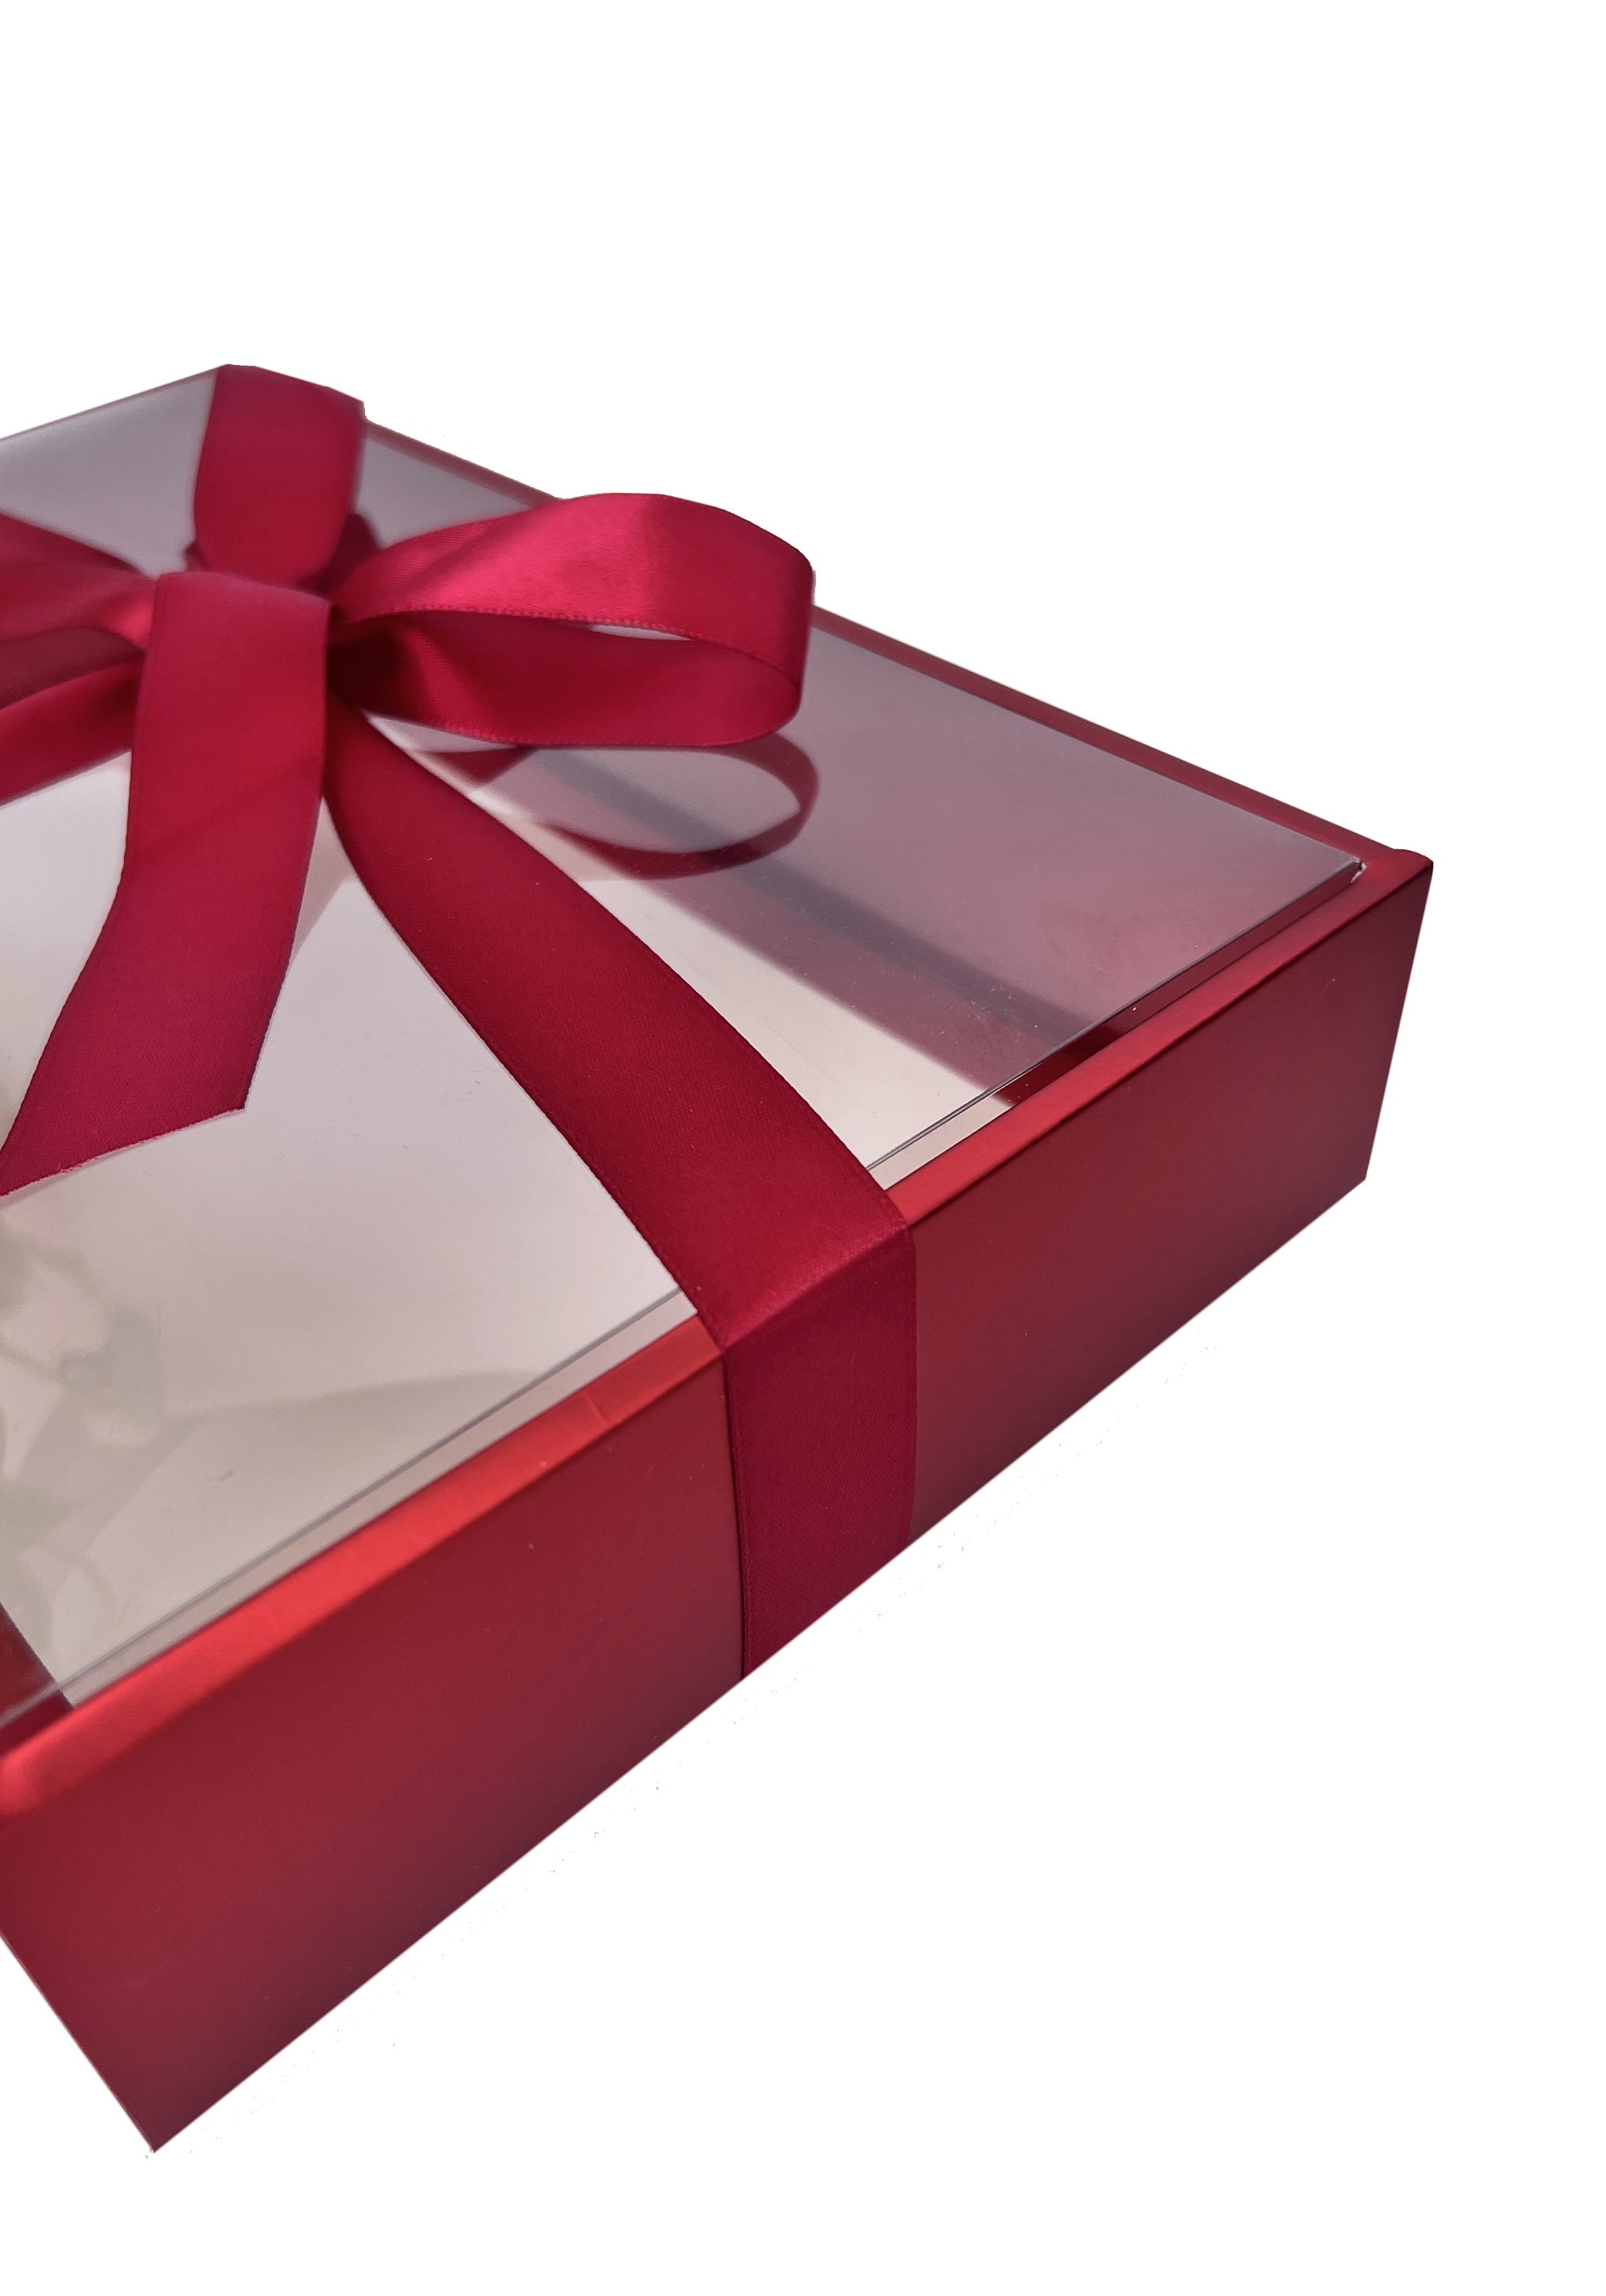 Elegant White Gift Bag Wide Black Ribbon & Black Cords 13-3/4 X 11-3/4 X  4-1/8 Inch for Gift Gifting 